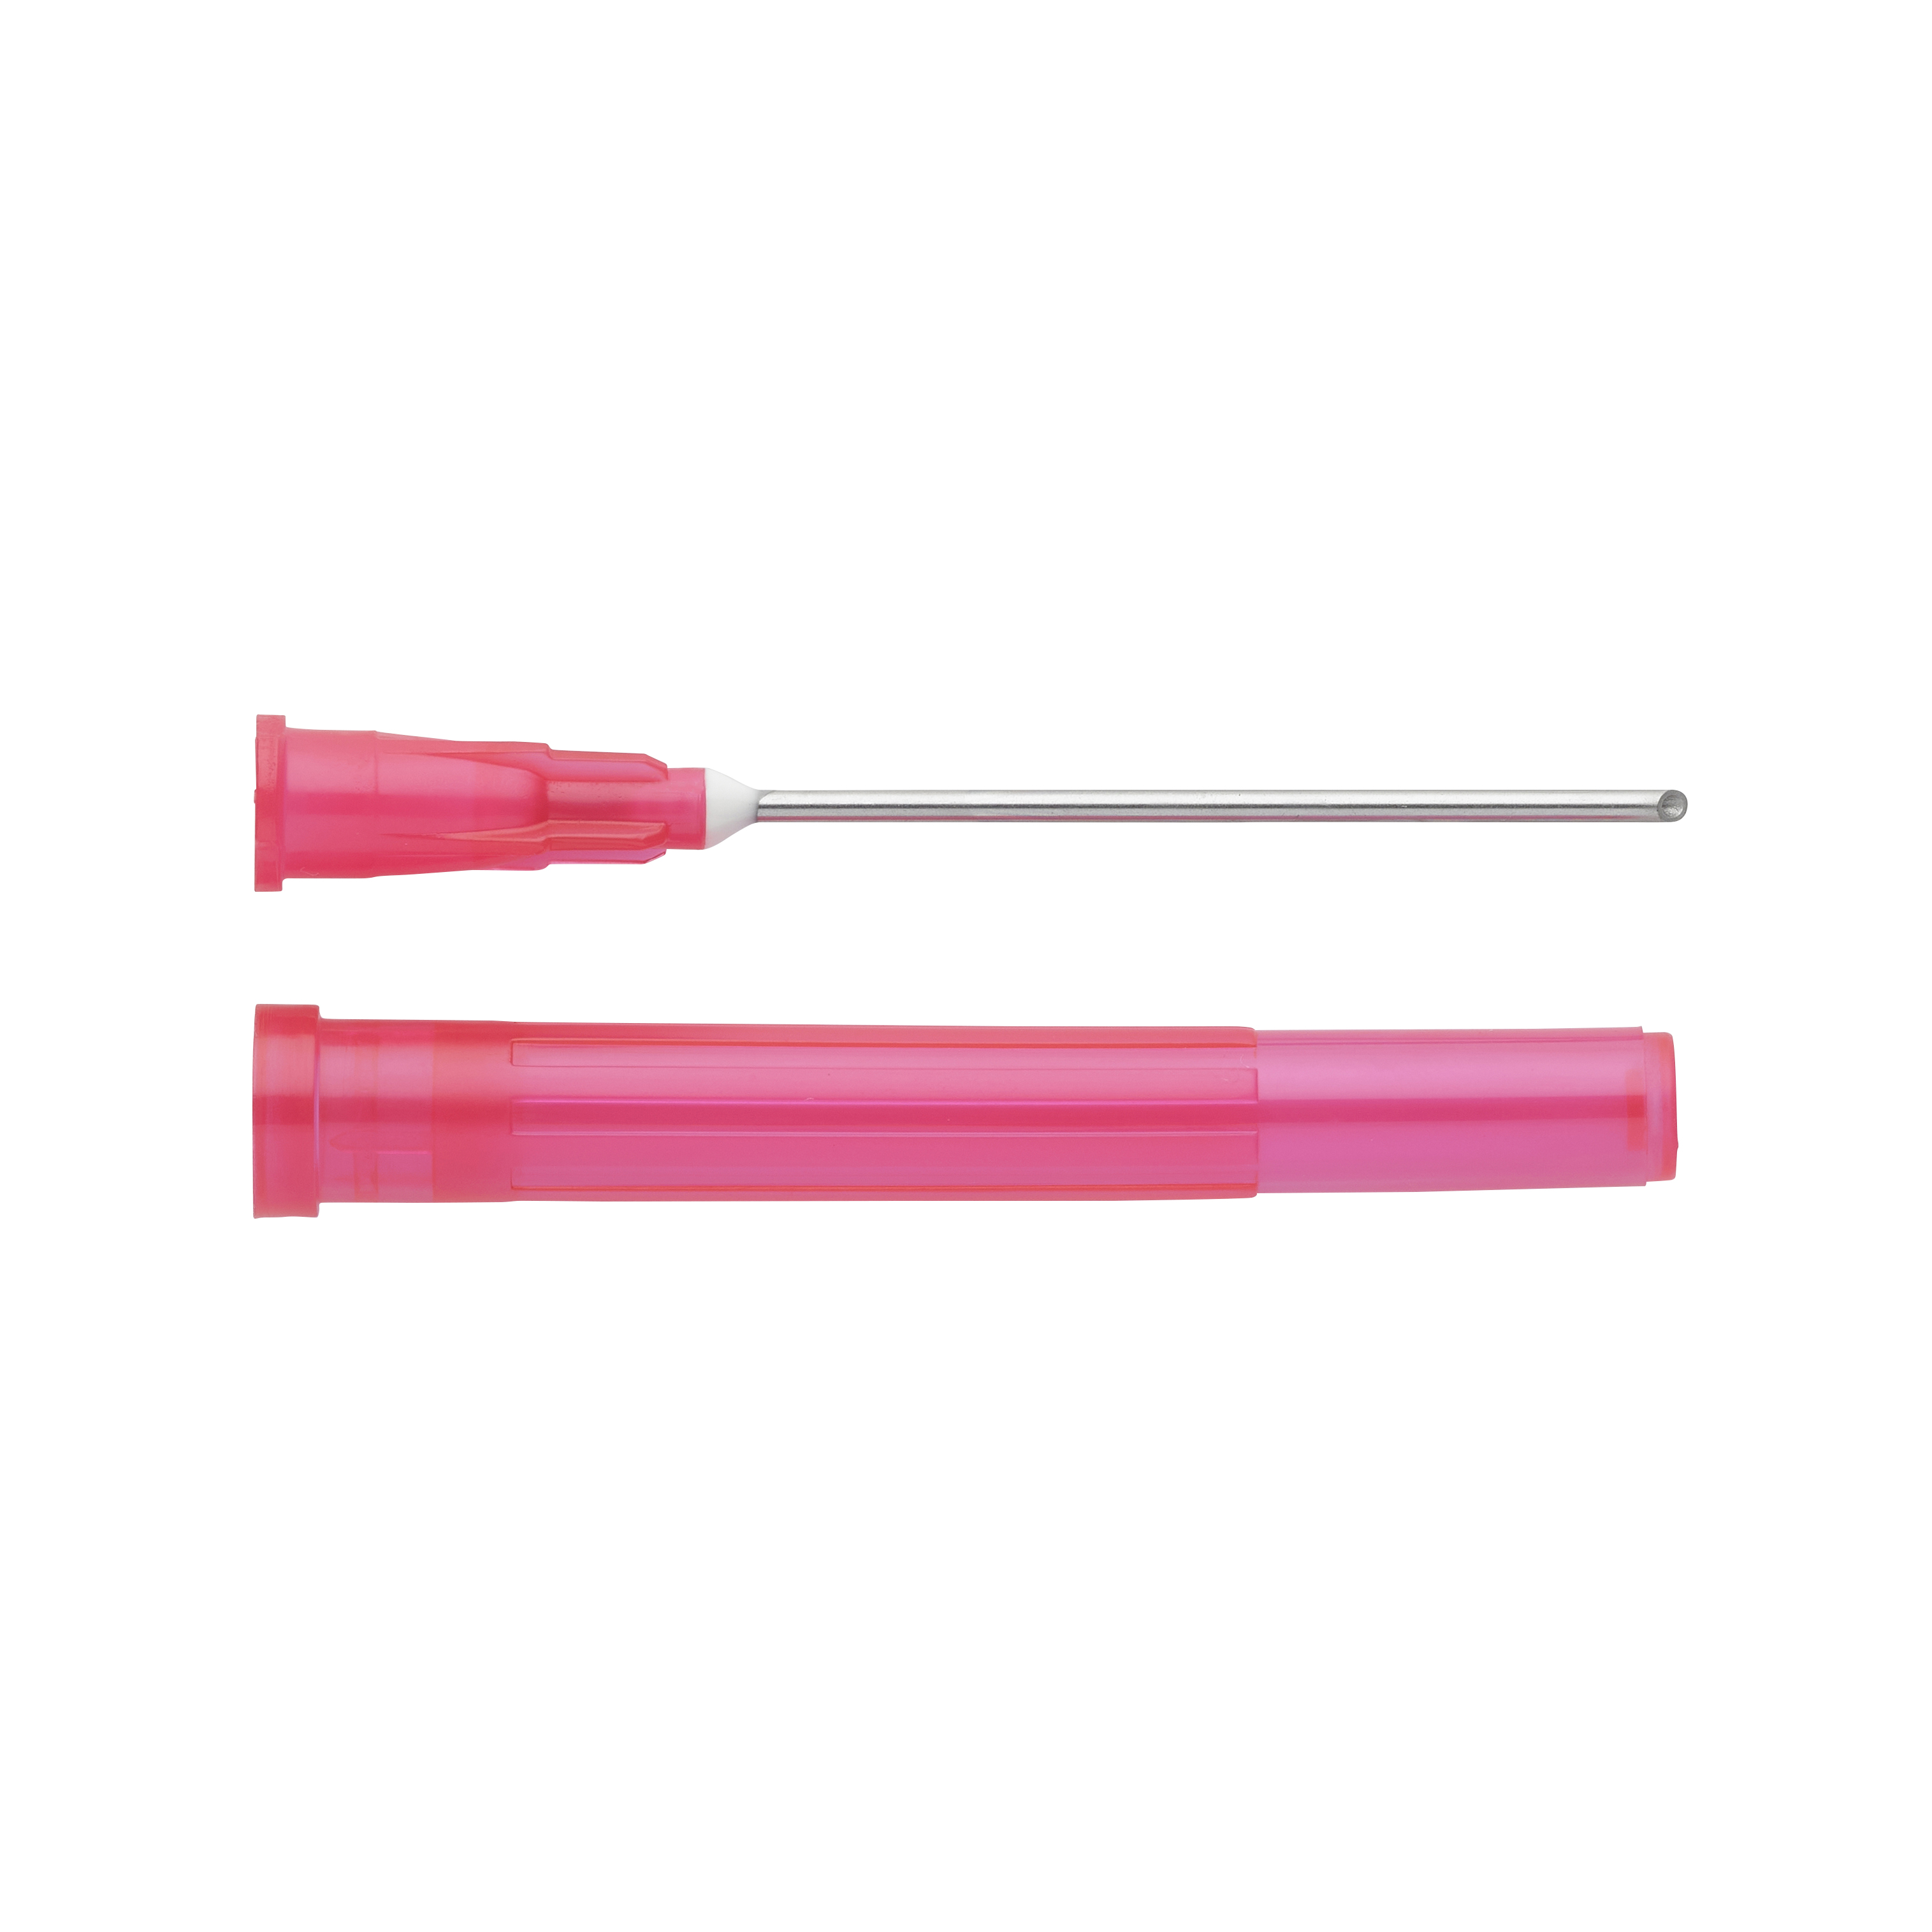 Terumo Unisharp Blunt Fill Needle 18g x 1 1/2 inch - Bevelled 40 degrees (Red) image 0